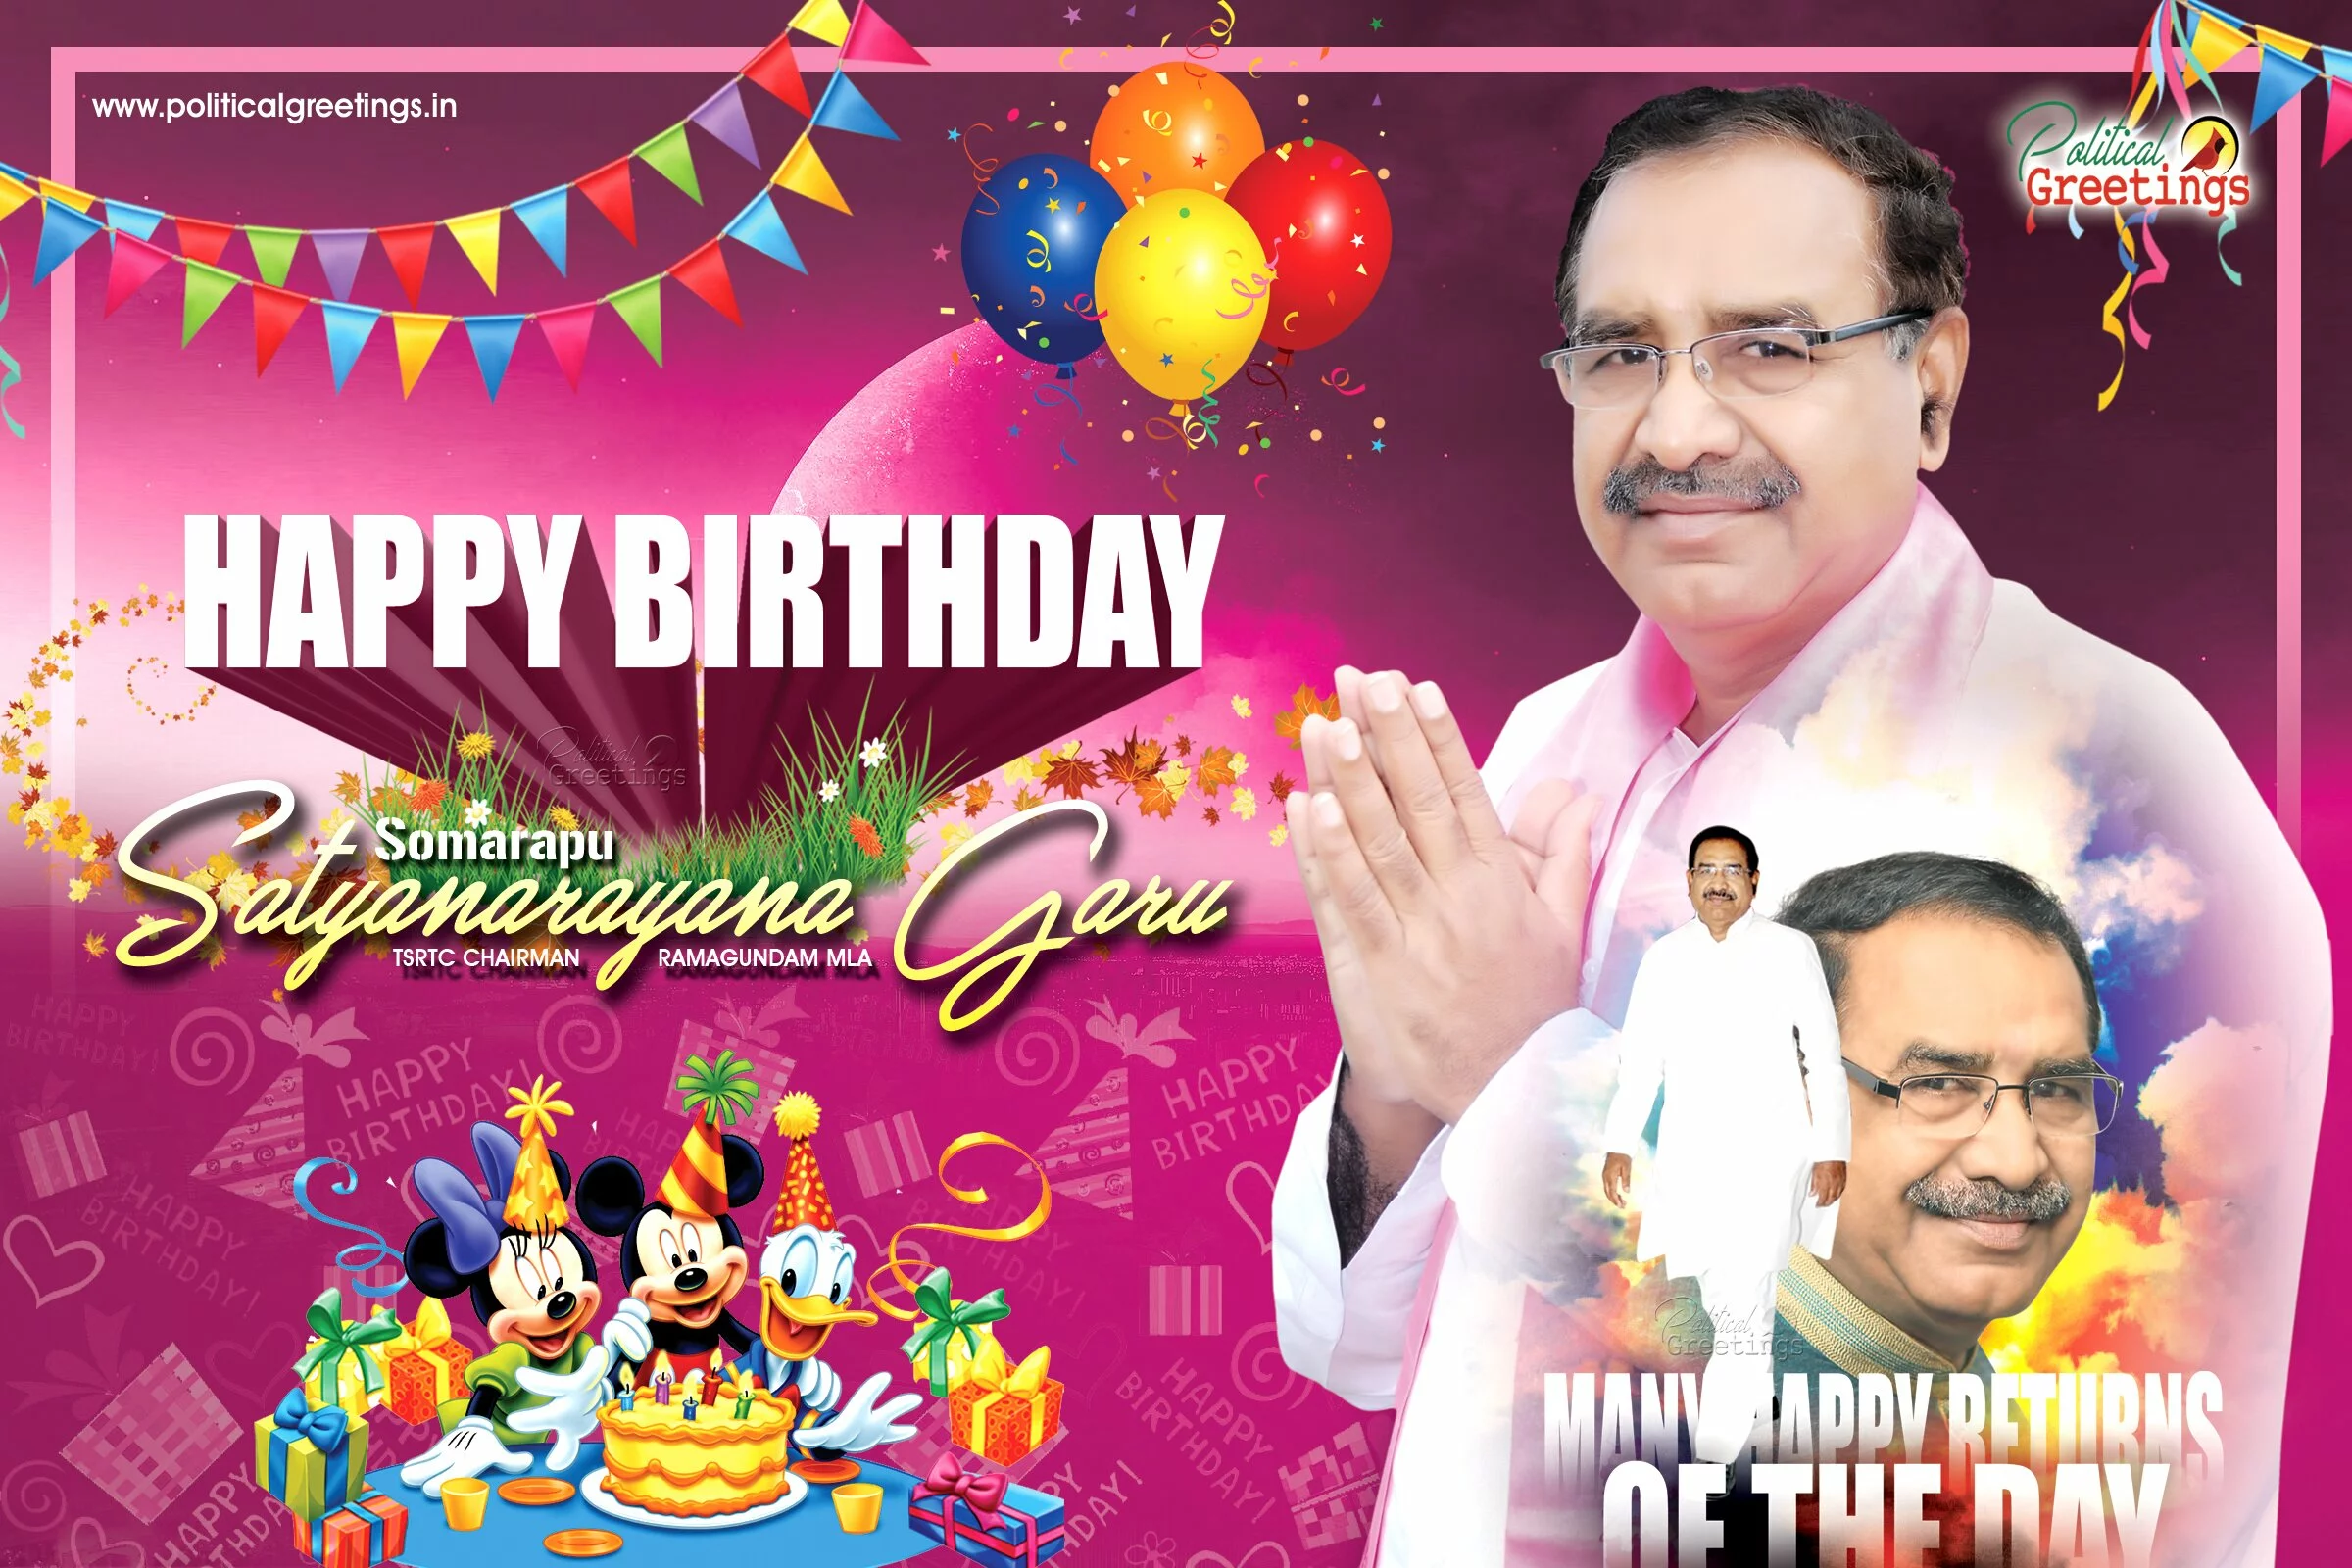 tsrtc-chairman-somarapu-satyanarayana-birthday-wishes-poster-quotes-wallpapers2